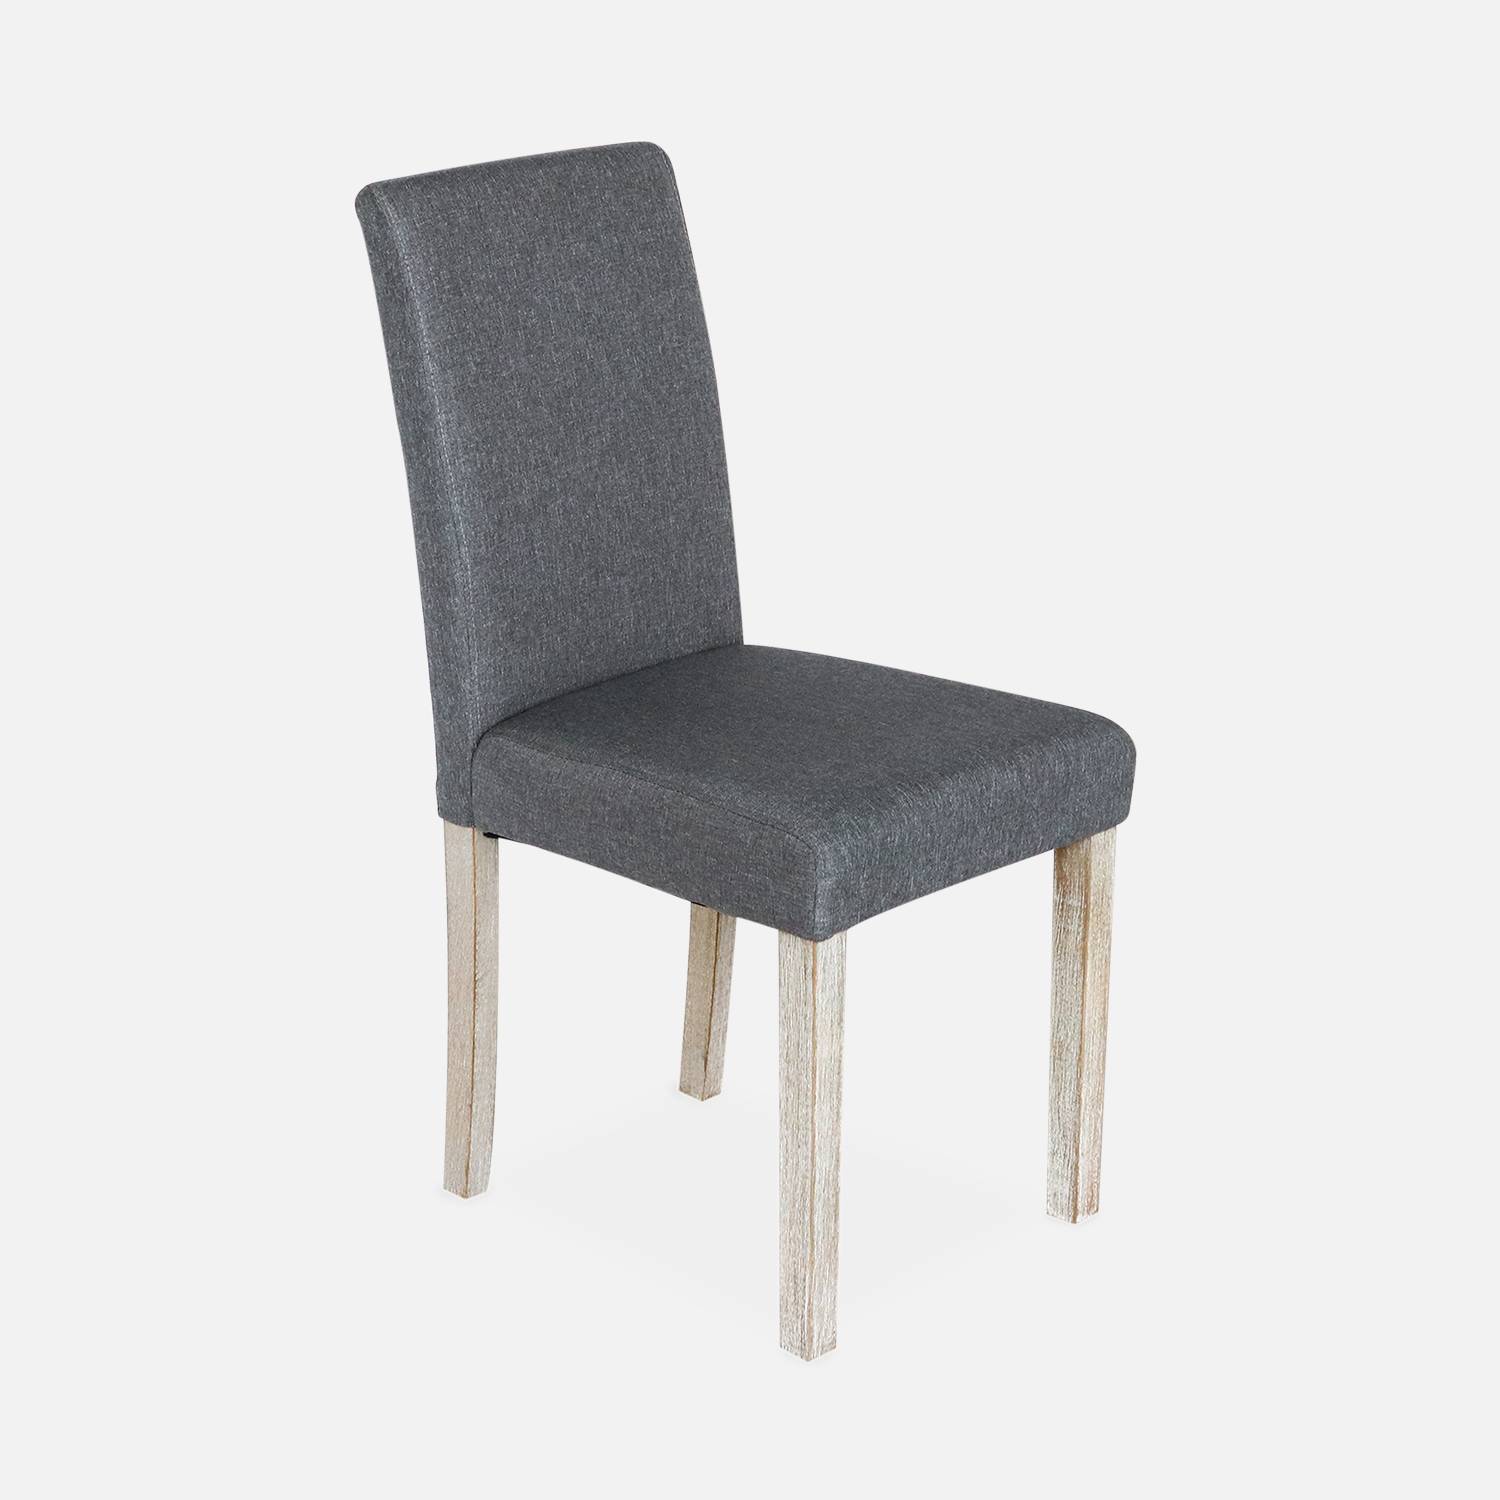  Set di 2 sedie - sedie in tessuto, gambe in legno sbiancato Photo4